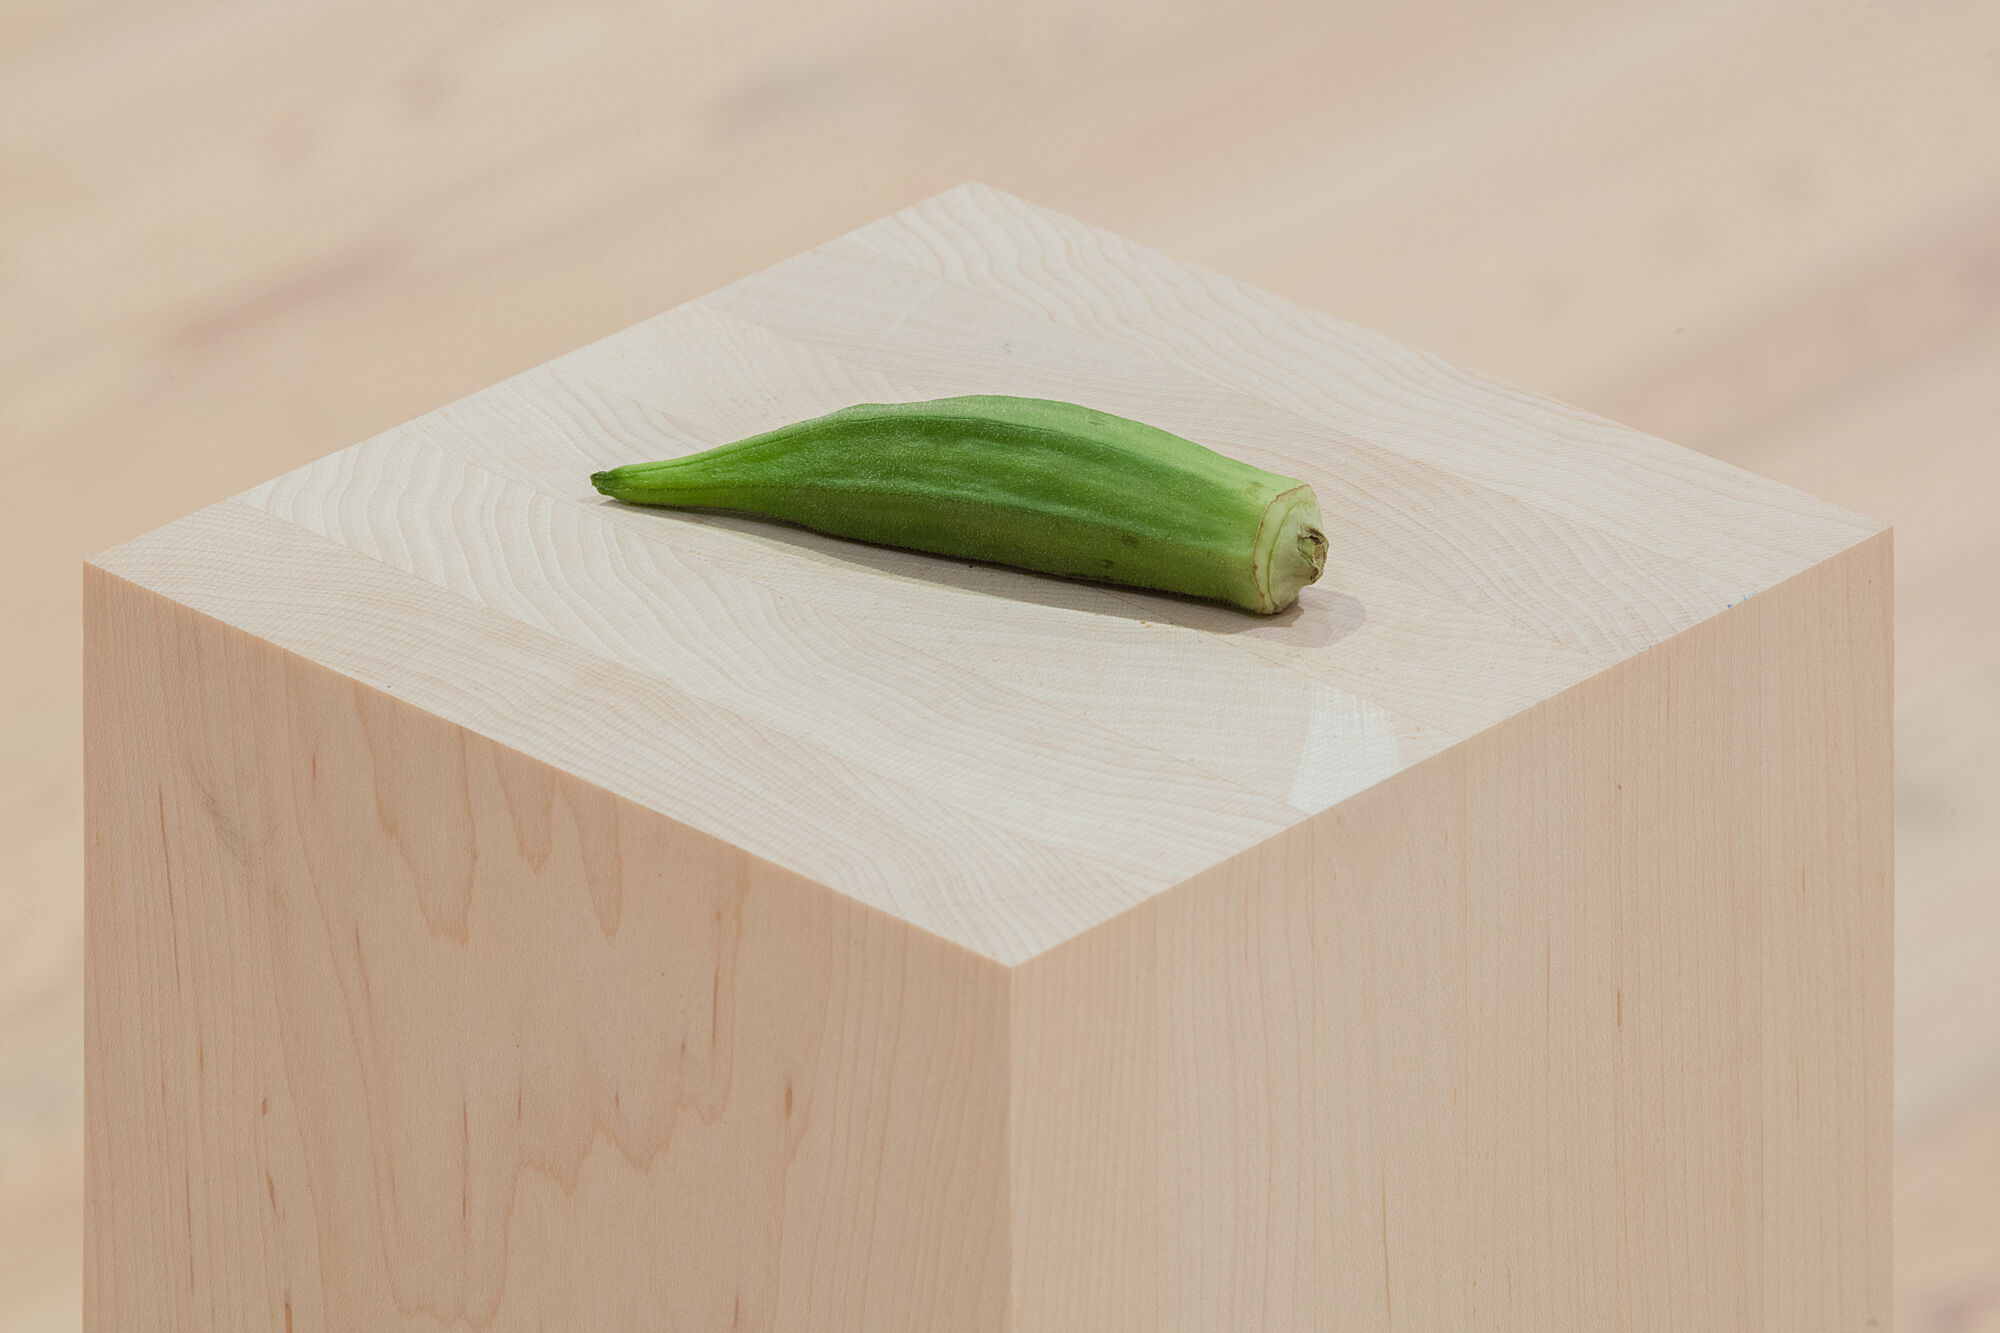 A photo of okra on a plinth.